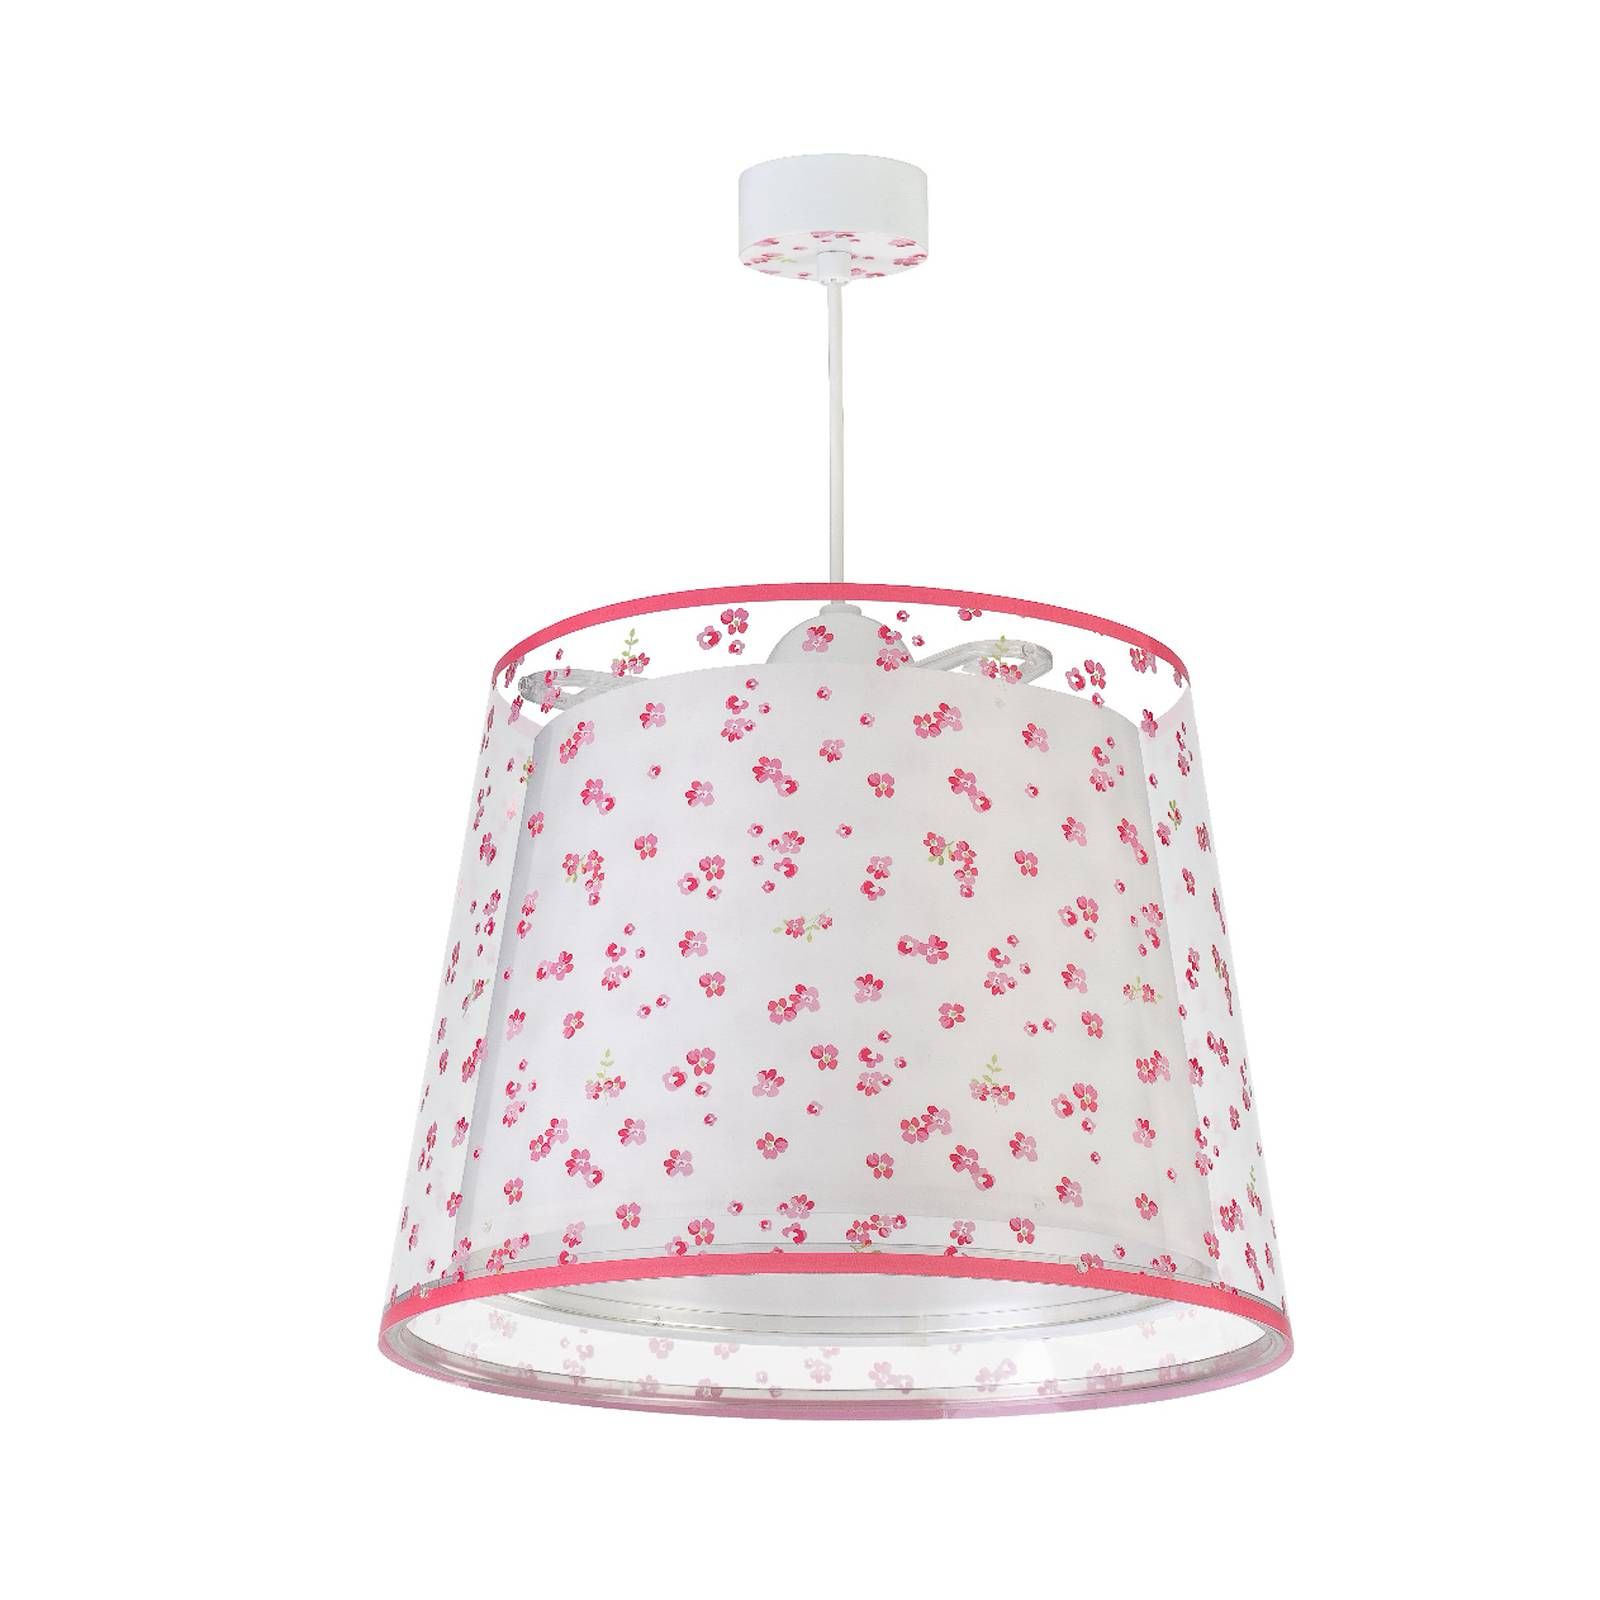 Dalber Detská závesná lampa Dream Flowers, 1-pl., ružová, Detská izba, plast, E27, 60W, K: 25cm